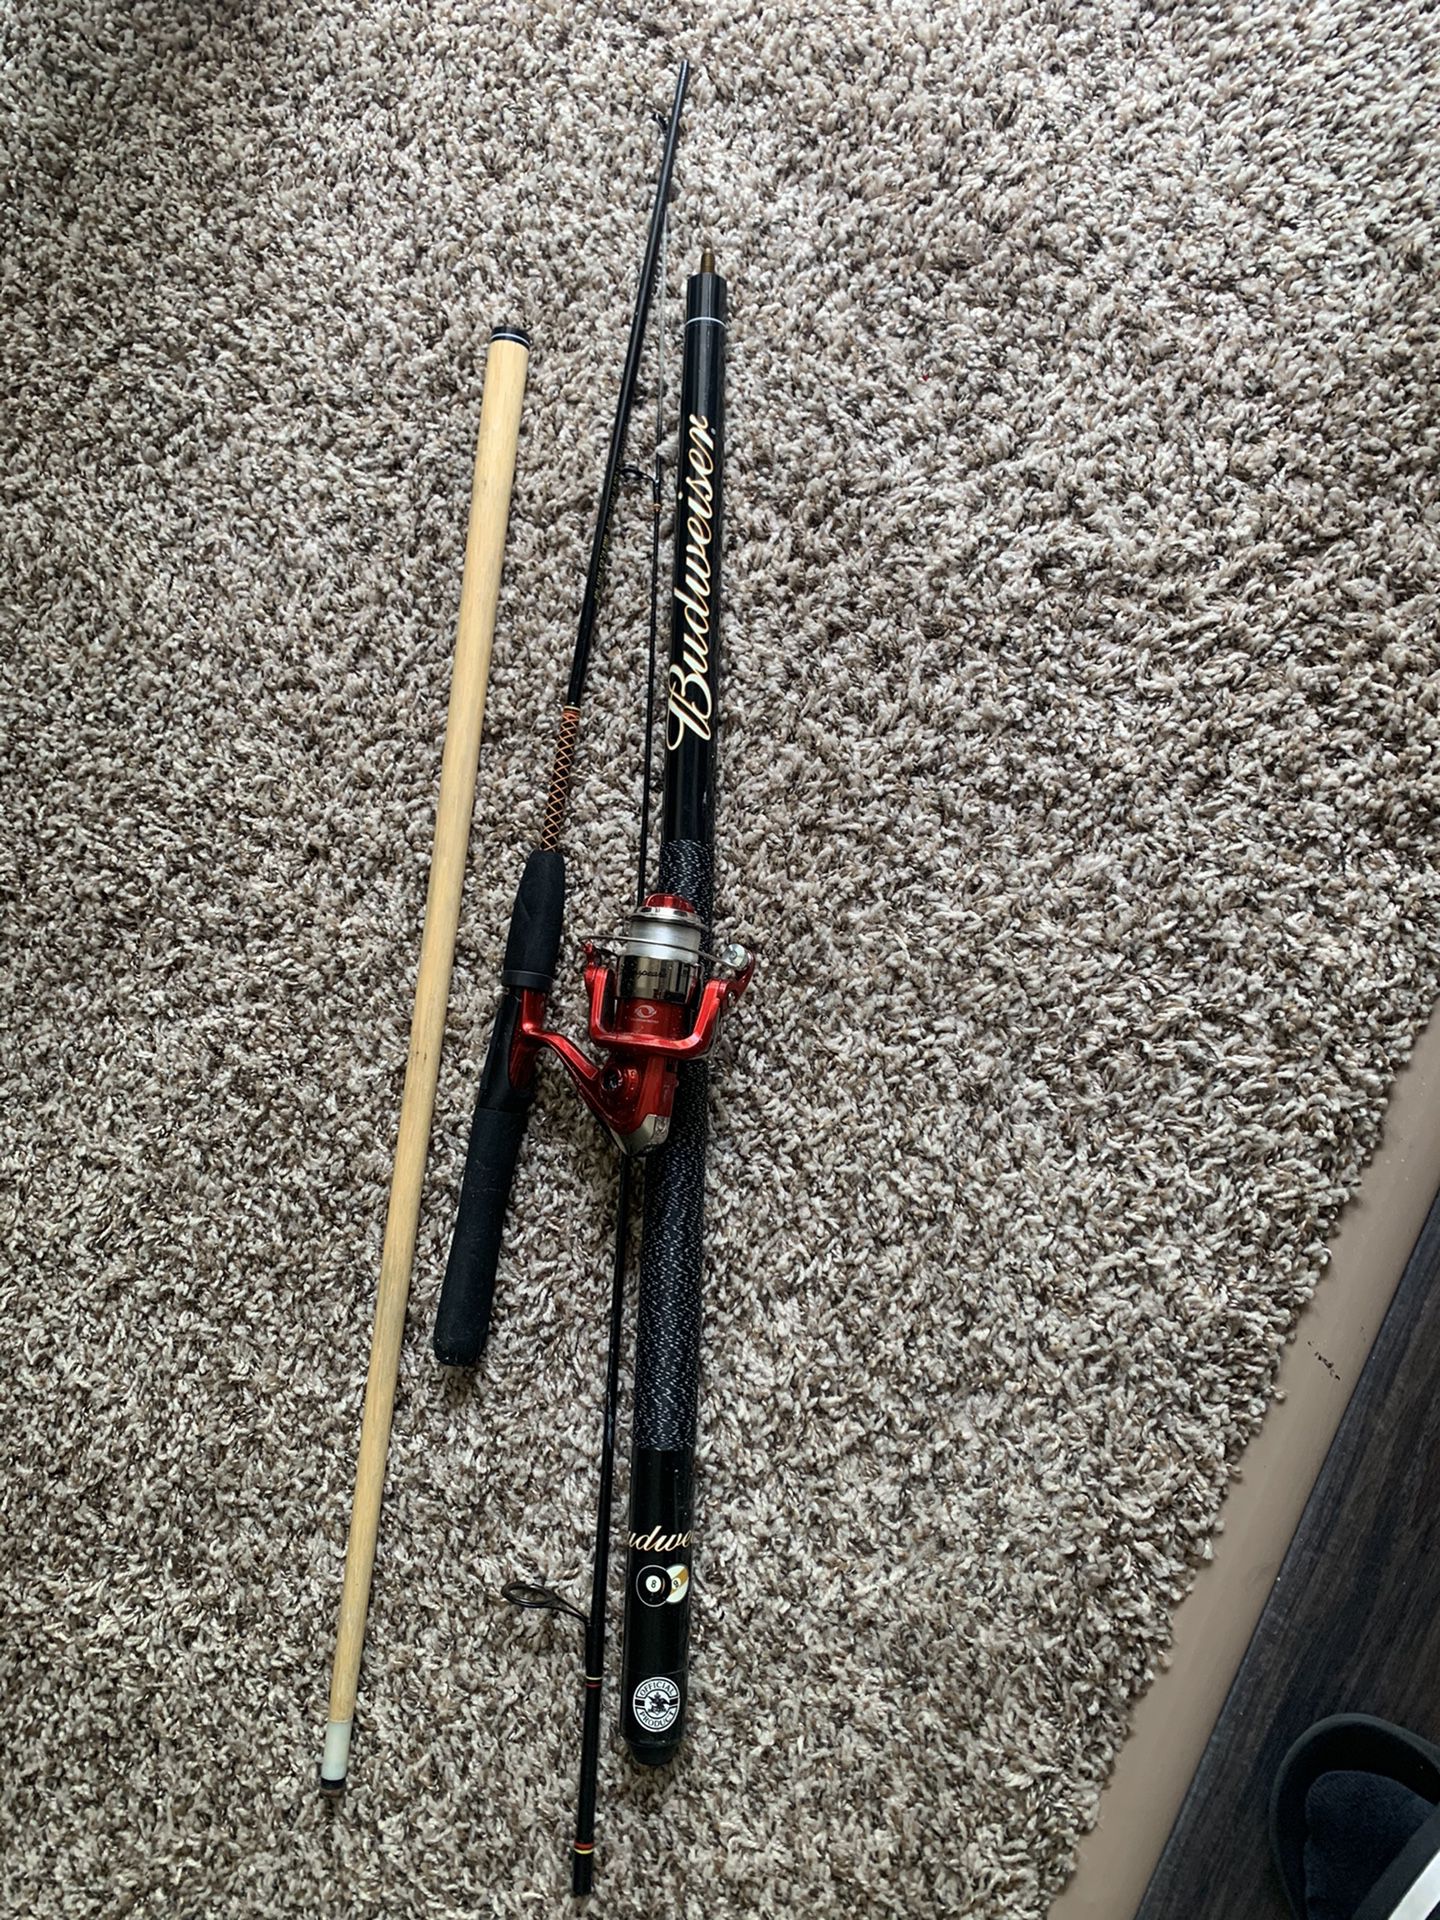 Fishing rod and pool stick